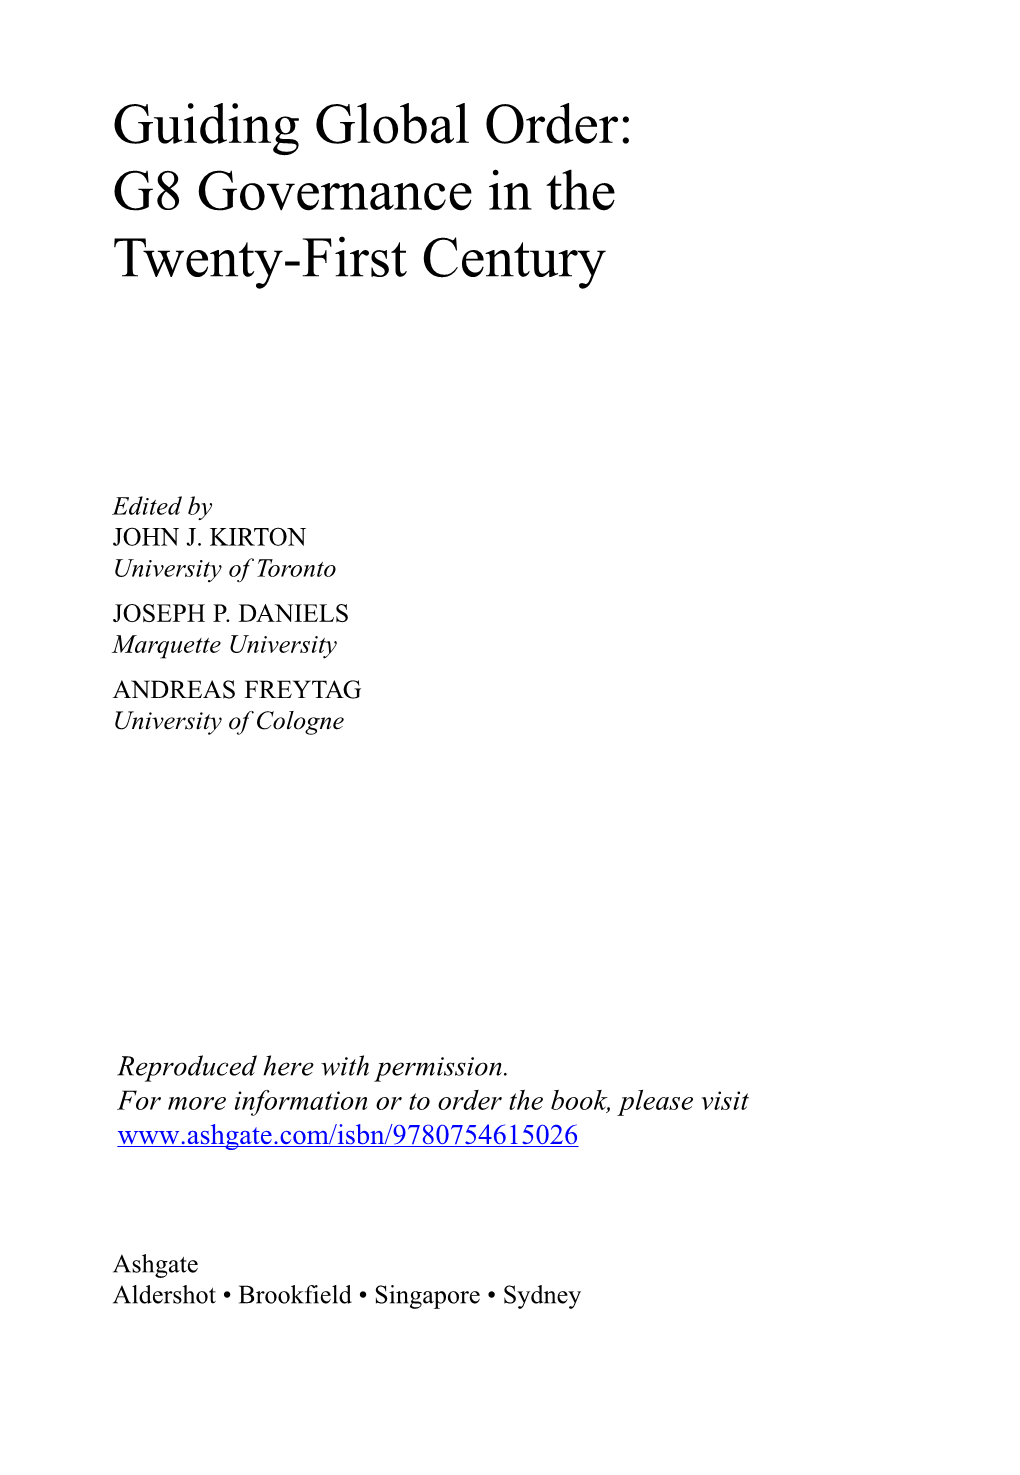 G8 Governance in the Twenty-First Century